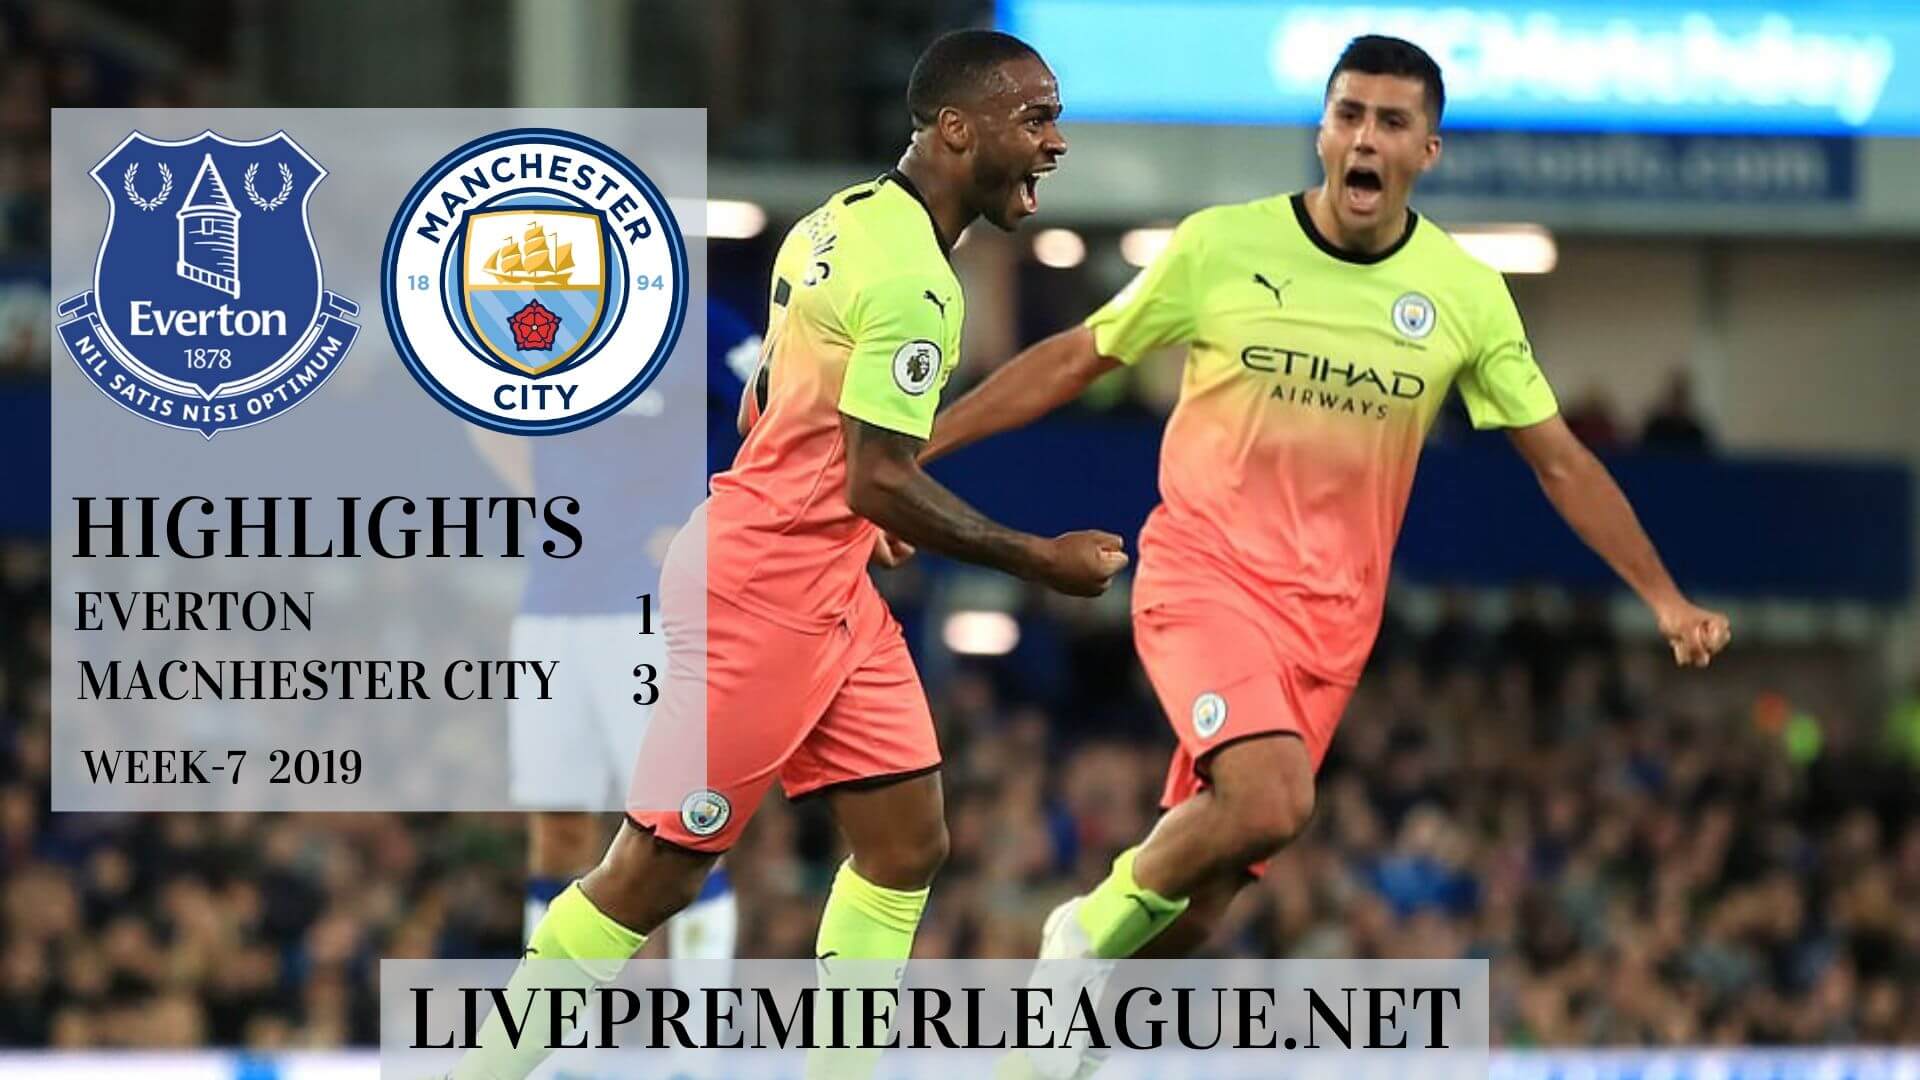 Everton vs Manchester City Highlights 2019 Week 7 